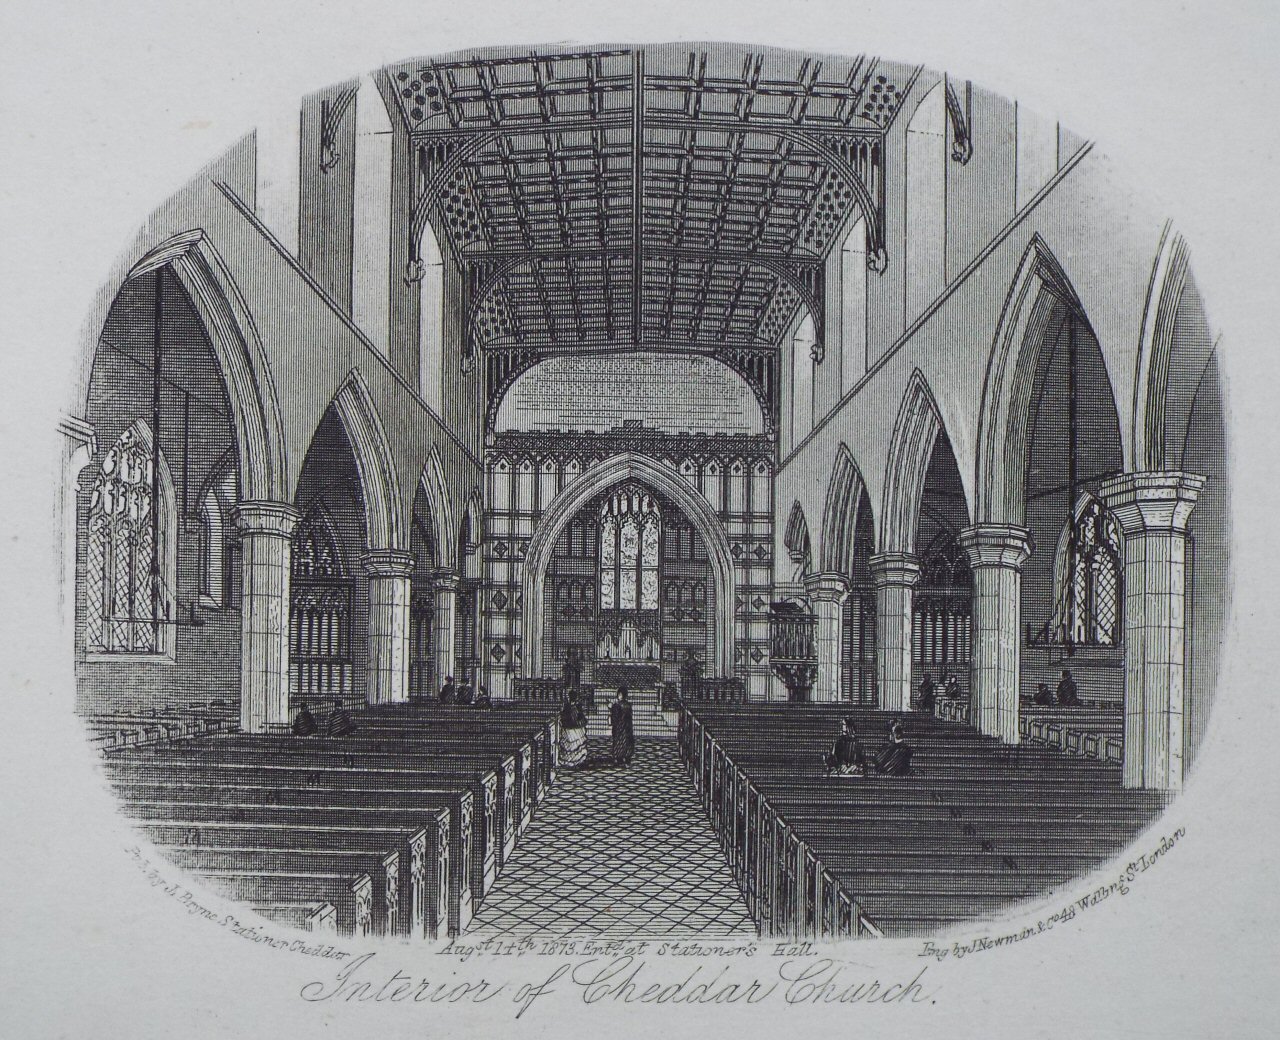 Steel Vignette - Interior of Cheddar Church. - Newman